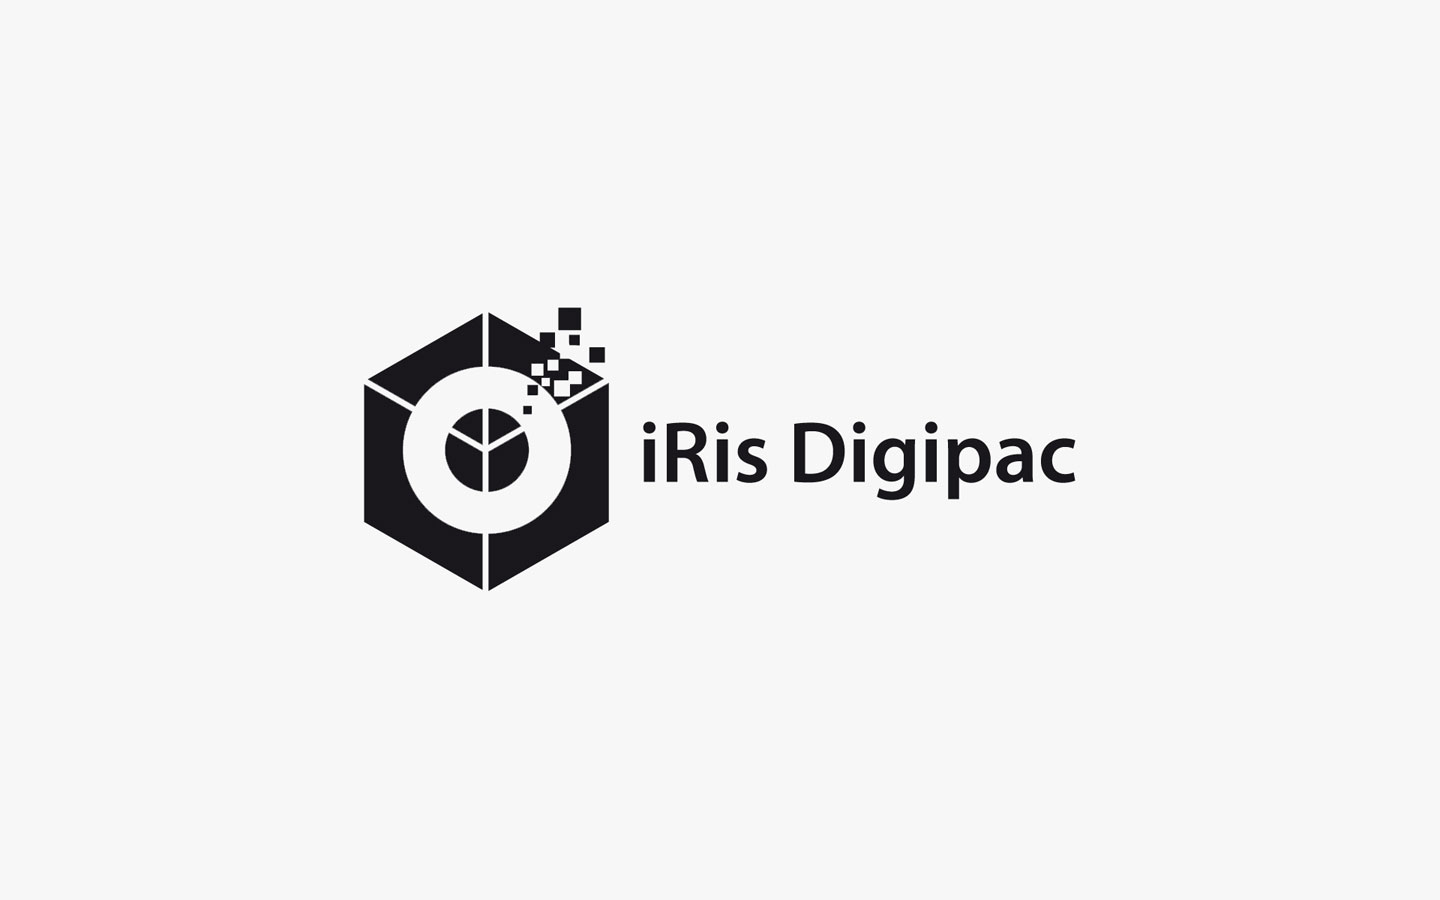 Iris Digipac Logo Design In Mono